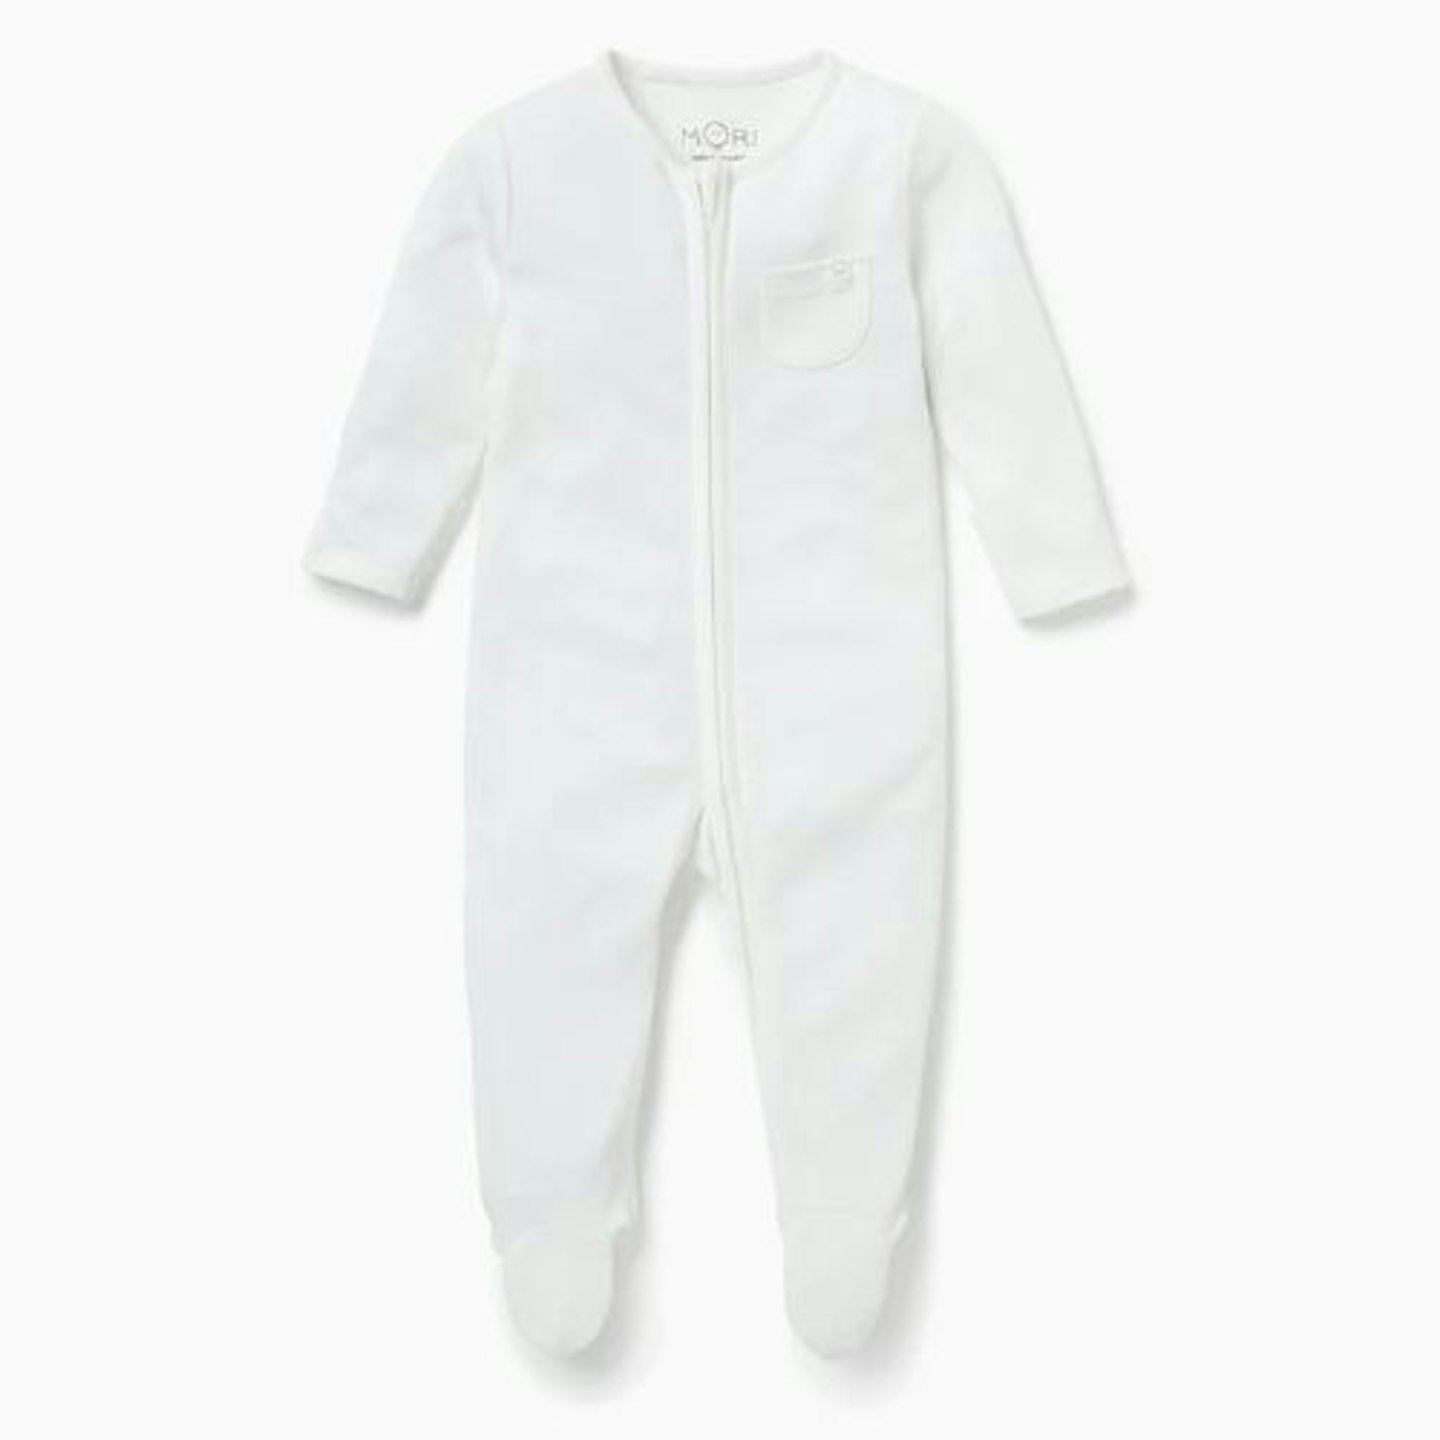 Best Baby MORI clothing Clever Zip Sleepsuit